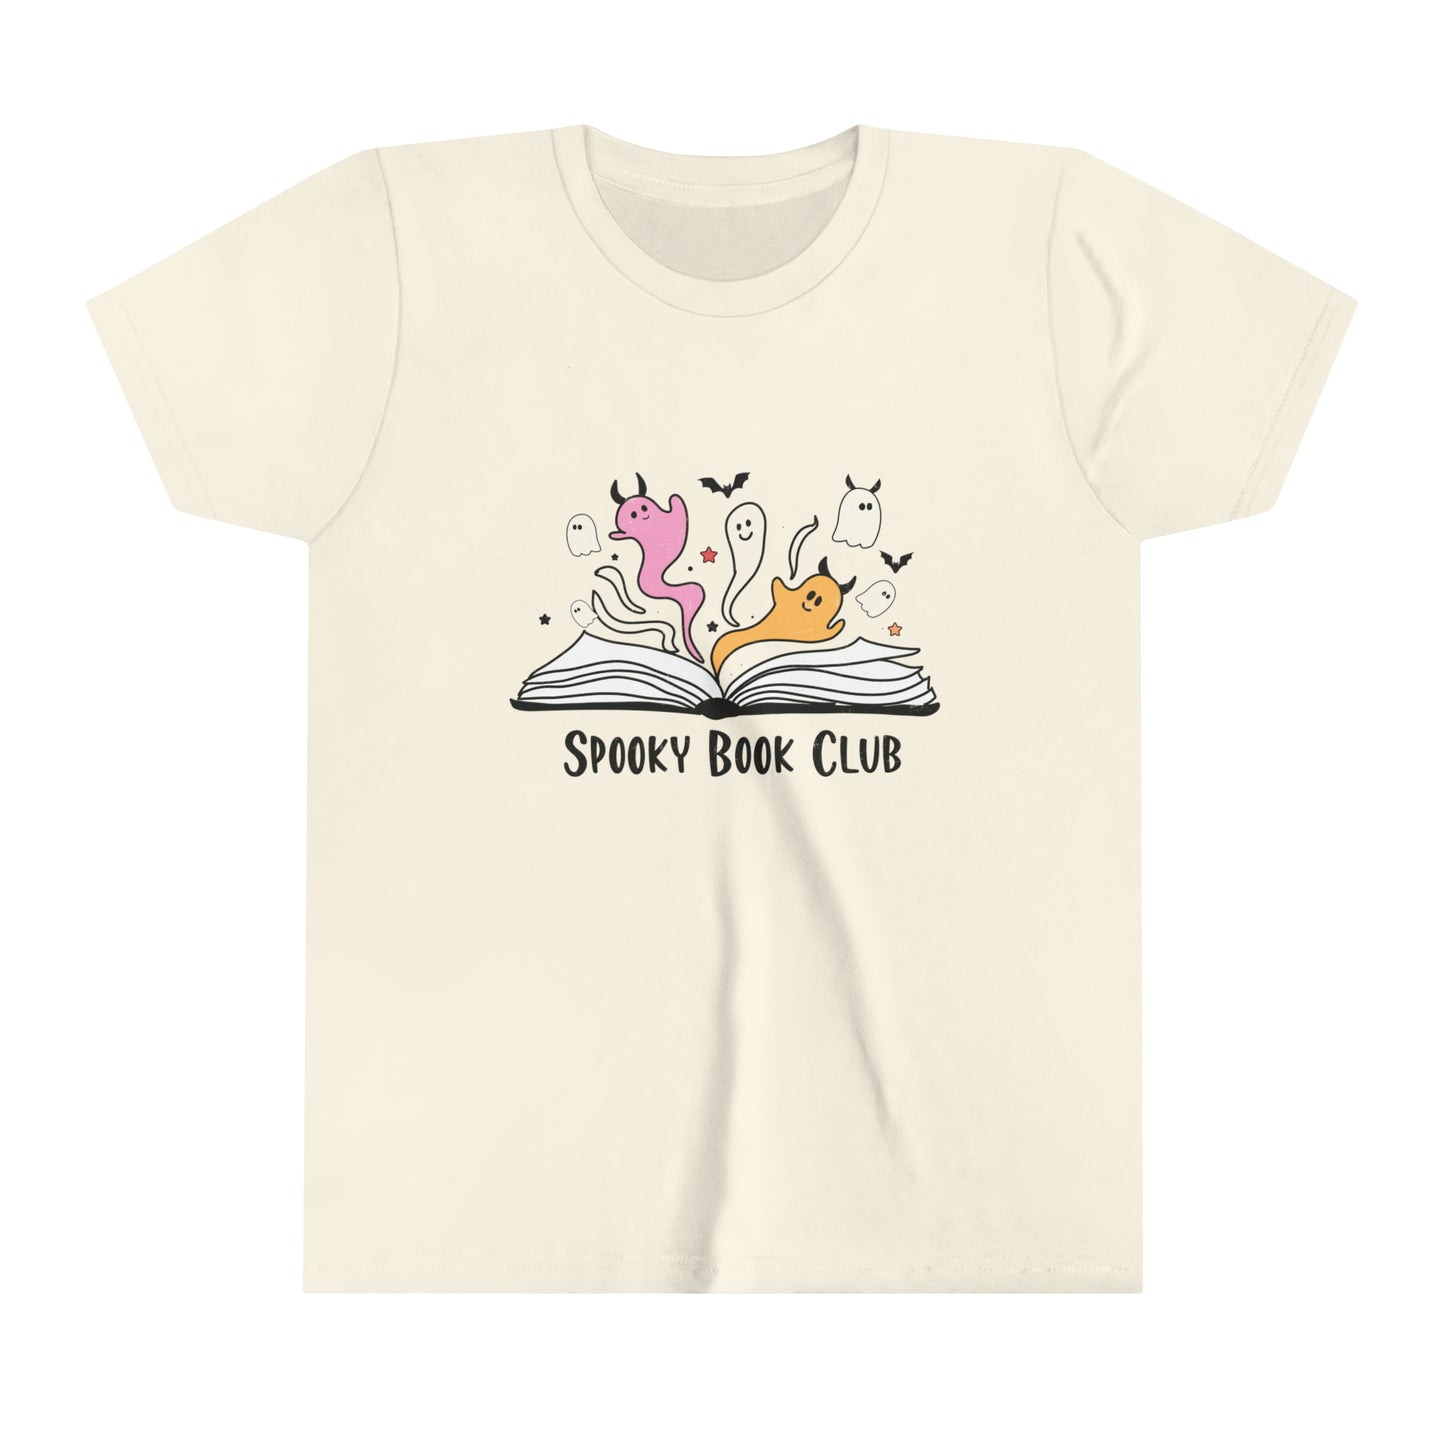 Spooky Book Club Girl's Youth Short Sleeve Tee